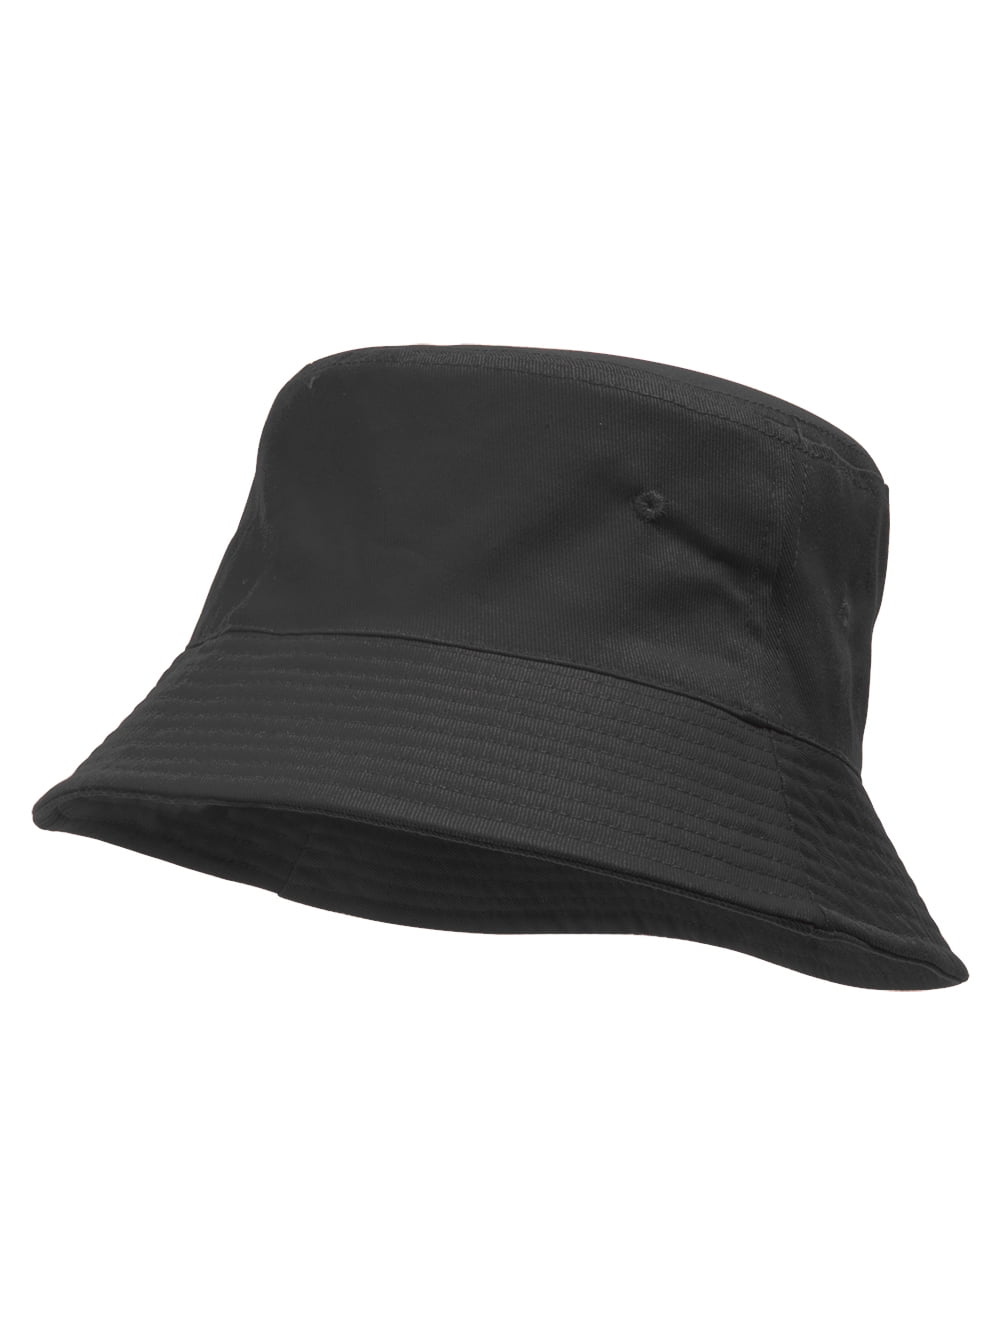 Bucket Hat For Men Women - Cotton Packable Fishing Cap, Black S/M 